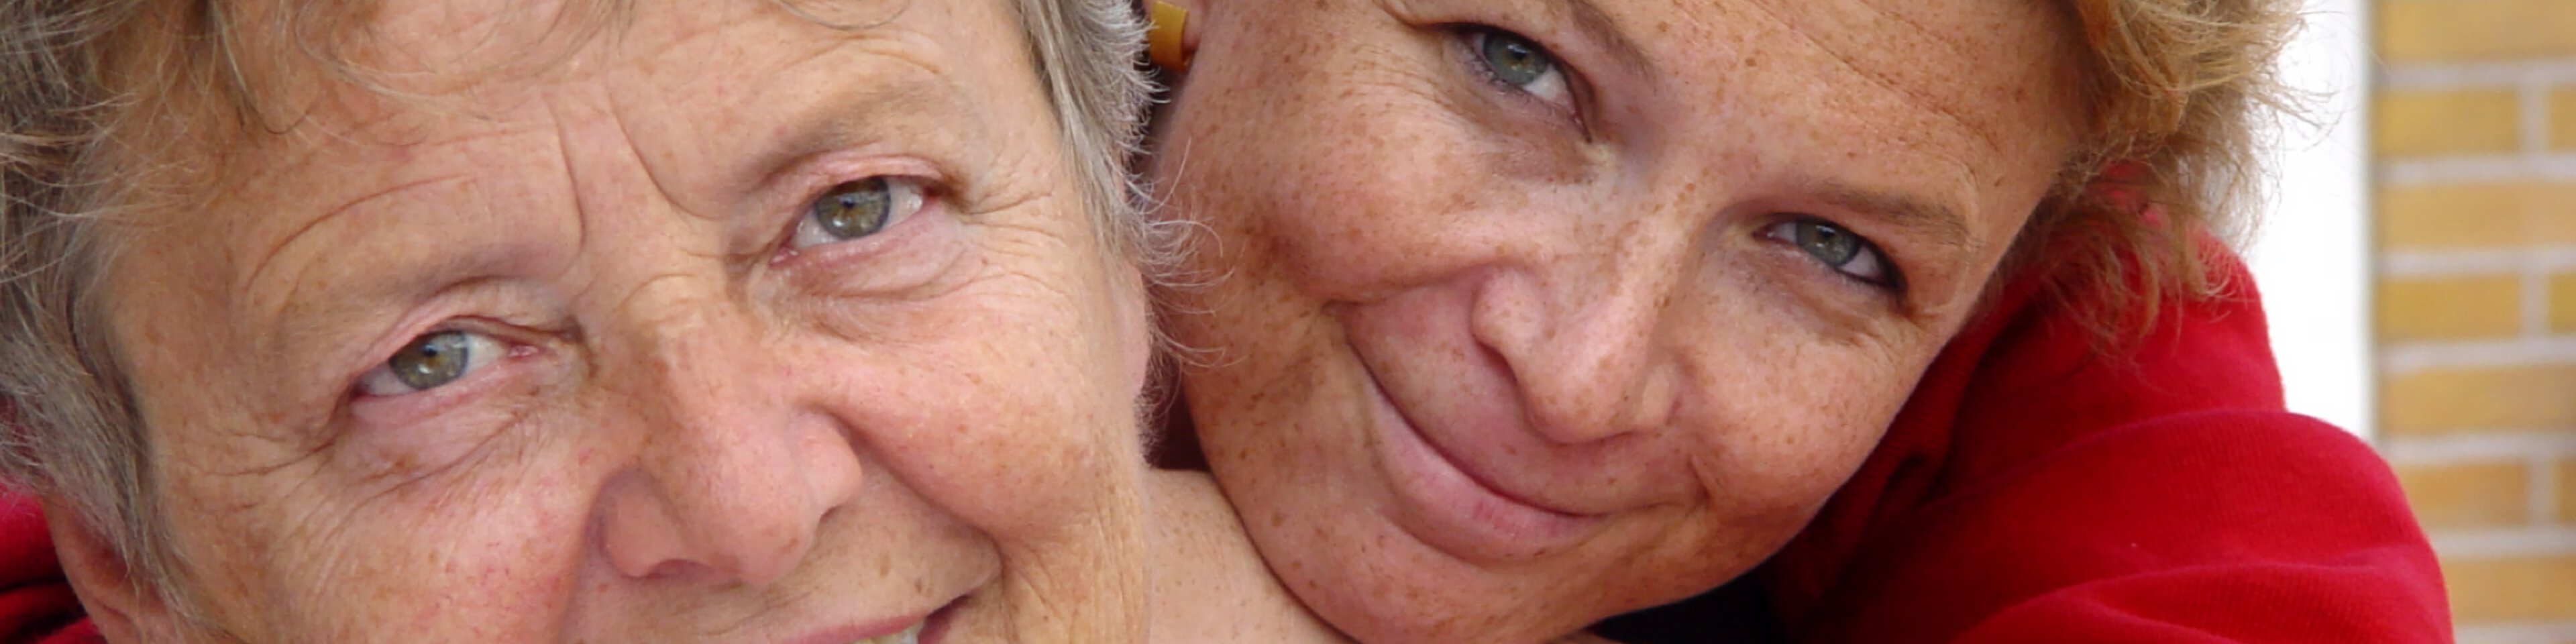 Zwei Frauen lachen in die Kamera | © ©Usch Hering - stock.adobe.com